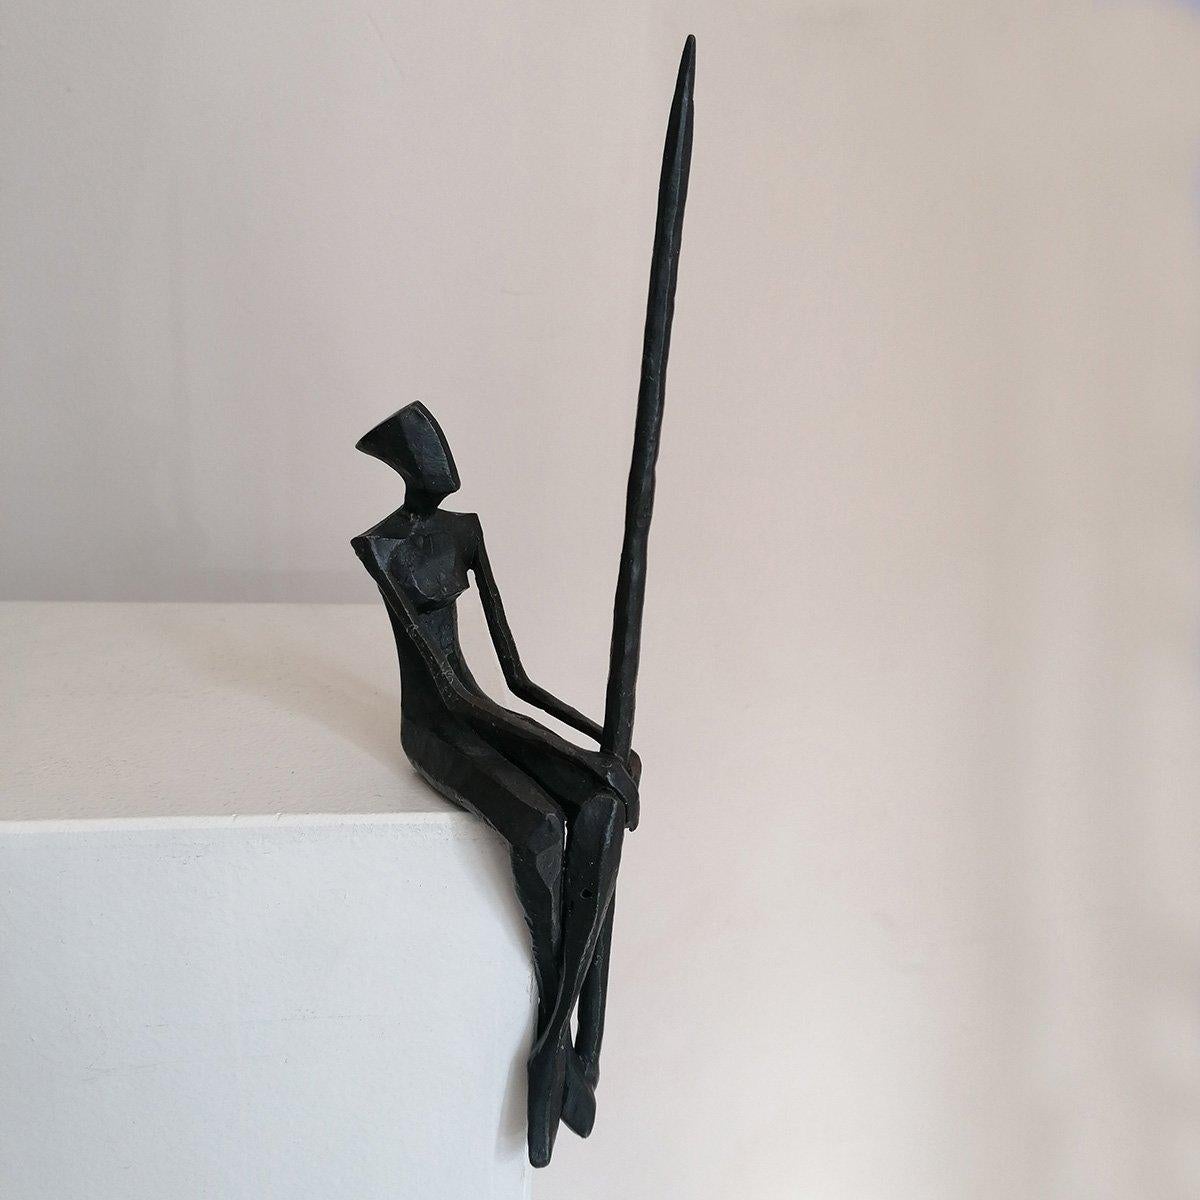 Nando Kallweit Floss bronze sculpture, edition of 25

Dimensions: 23cm tall figure including spear
Serial Unique